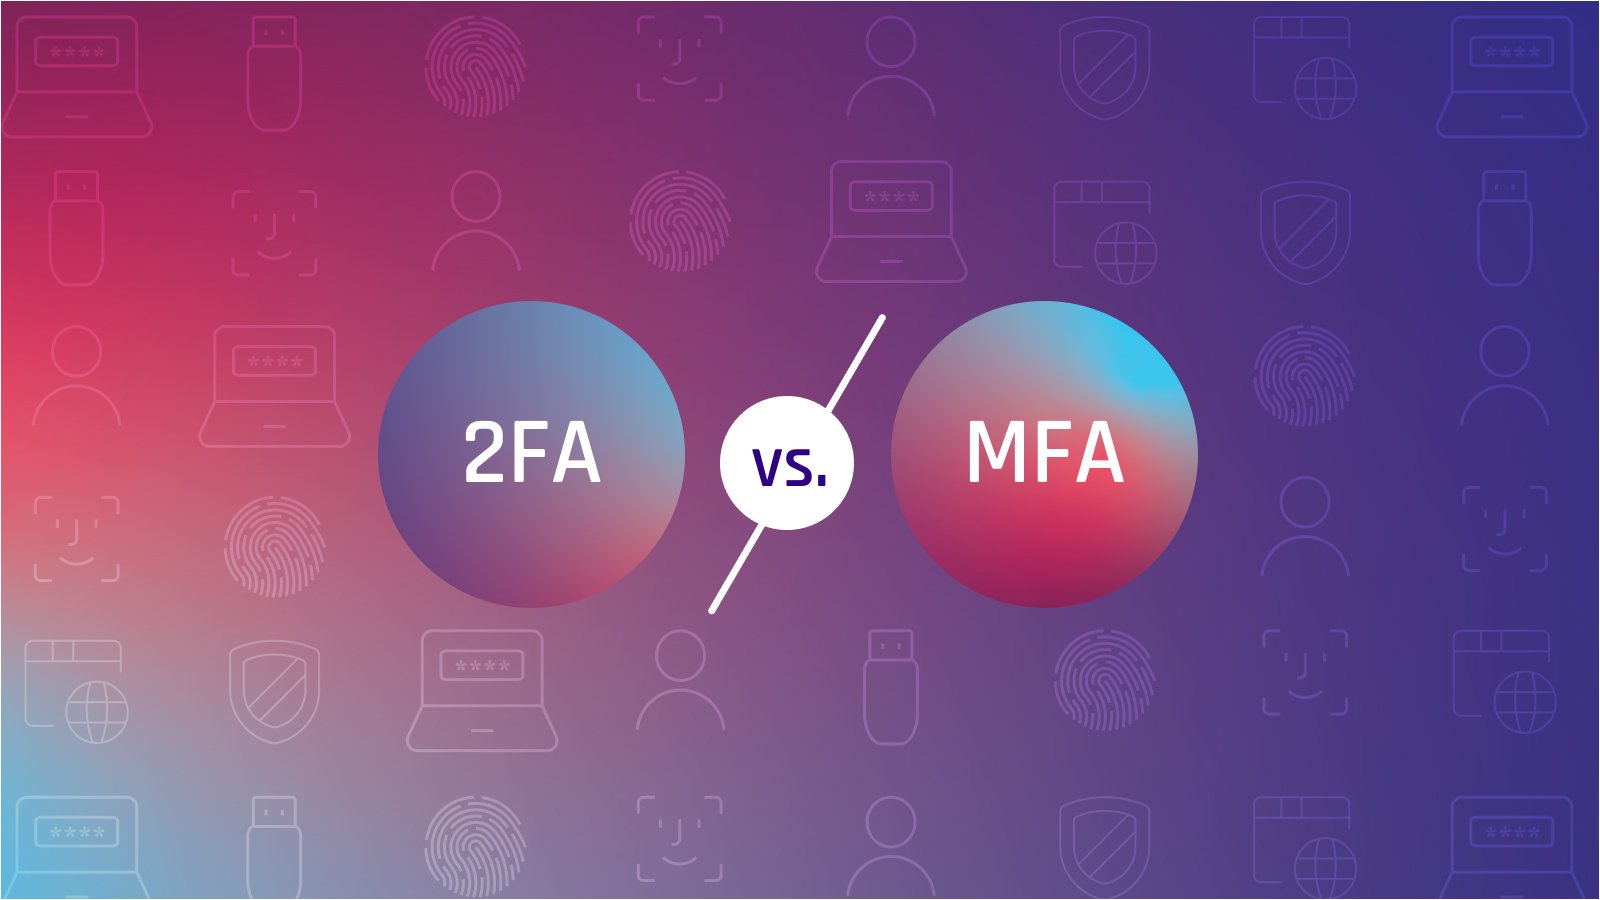 2FA vs. MFA: Authentication Methods - Key Differences Explained